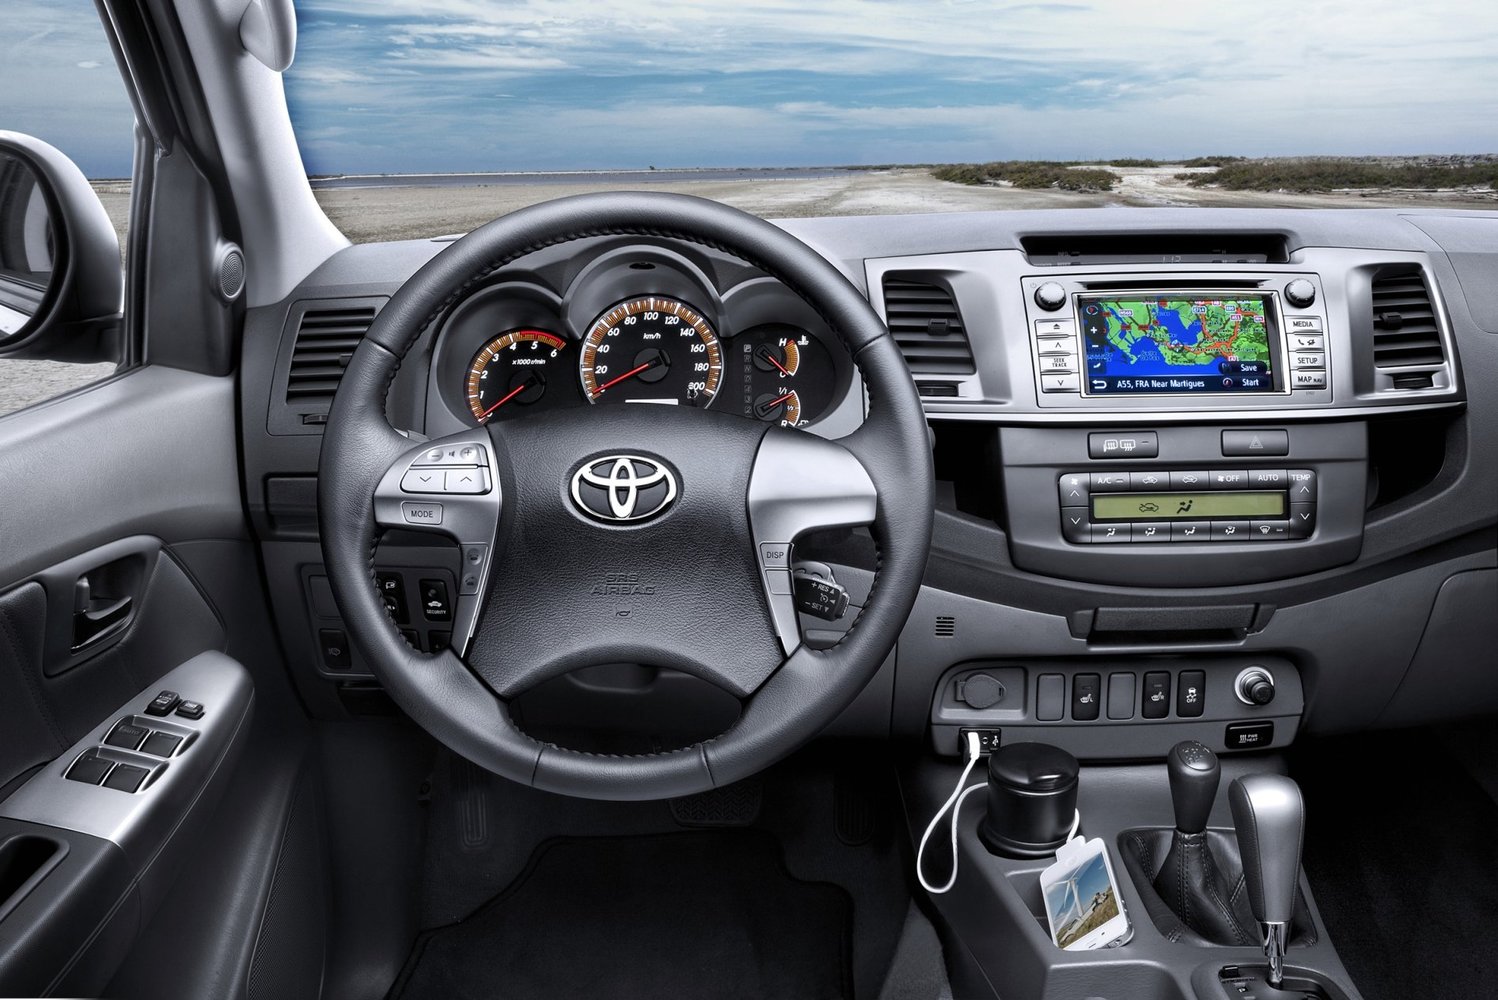 пикап Toyota Hilux 2011 - 2016г выпуска модификация 2.5 AT (144 л.с.) 4×4